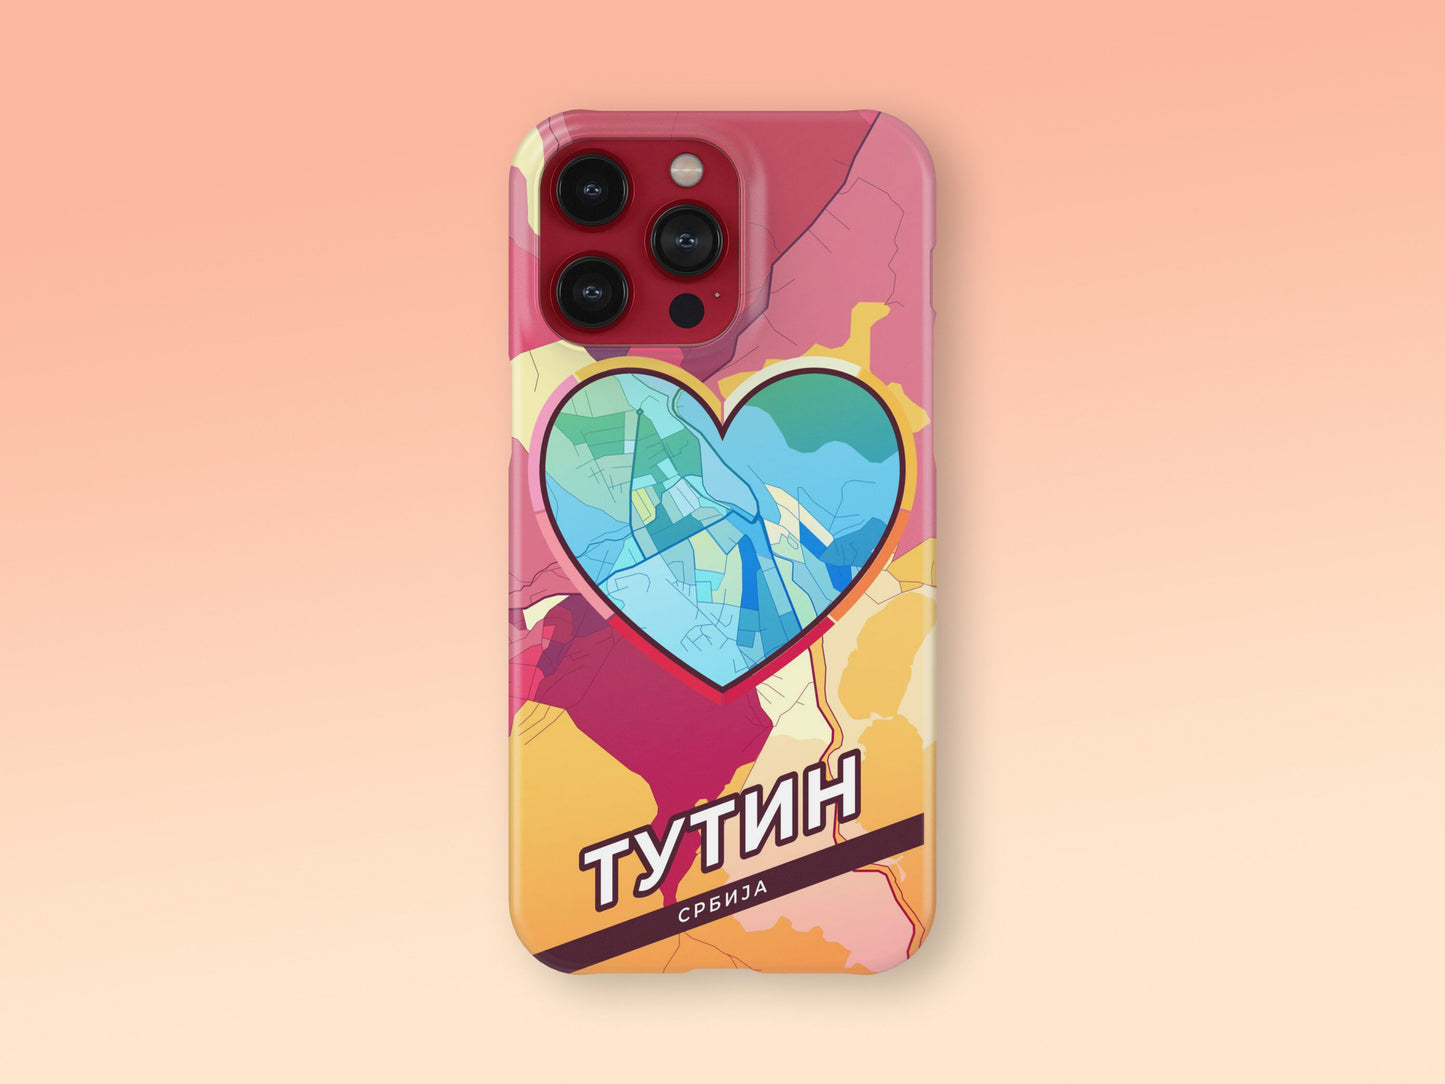 Tutin Serbia slim phone case with colorful icon 2